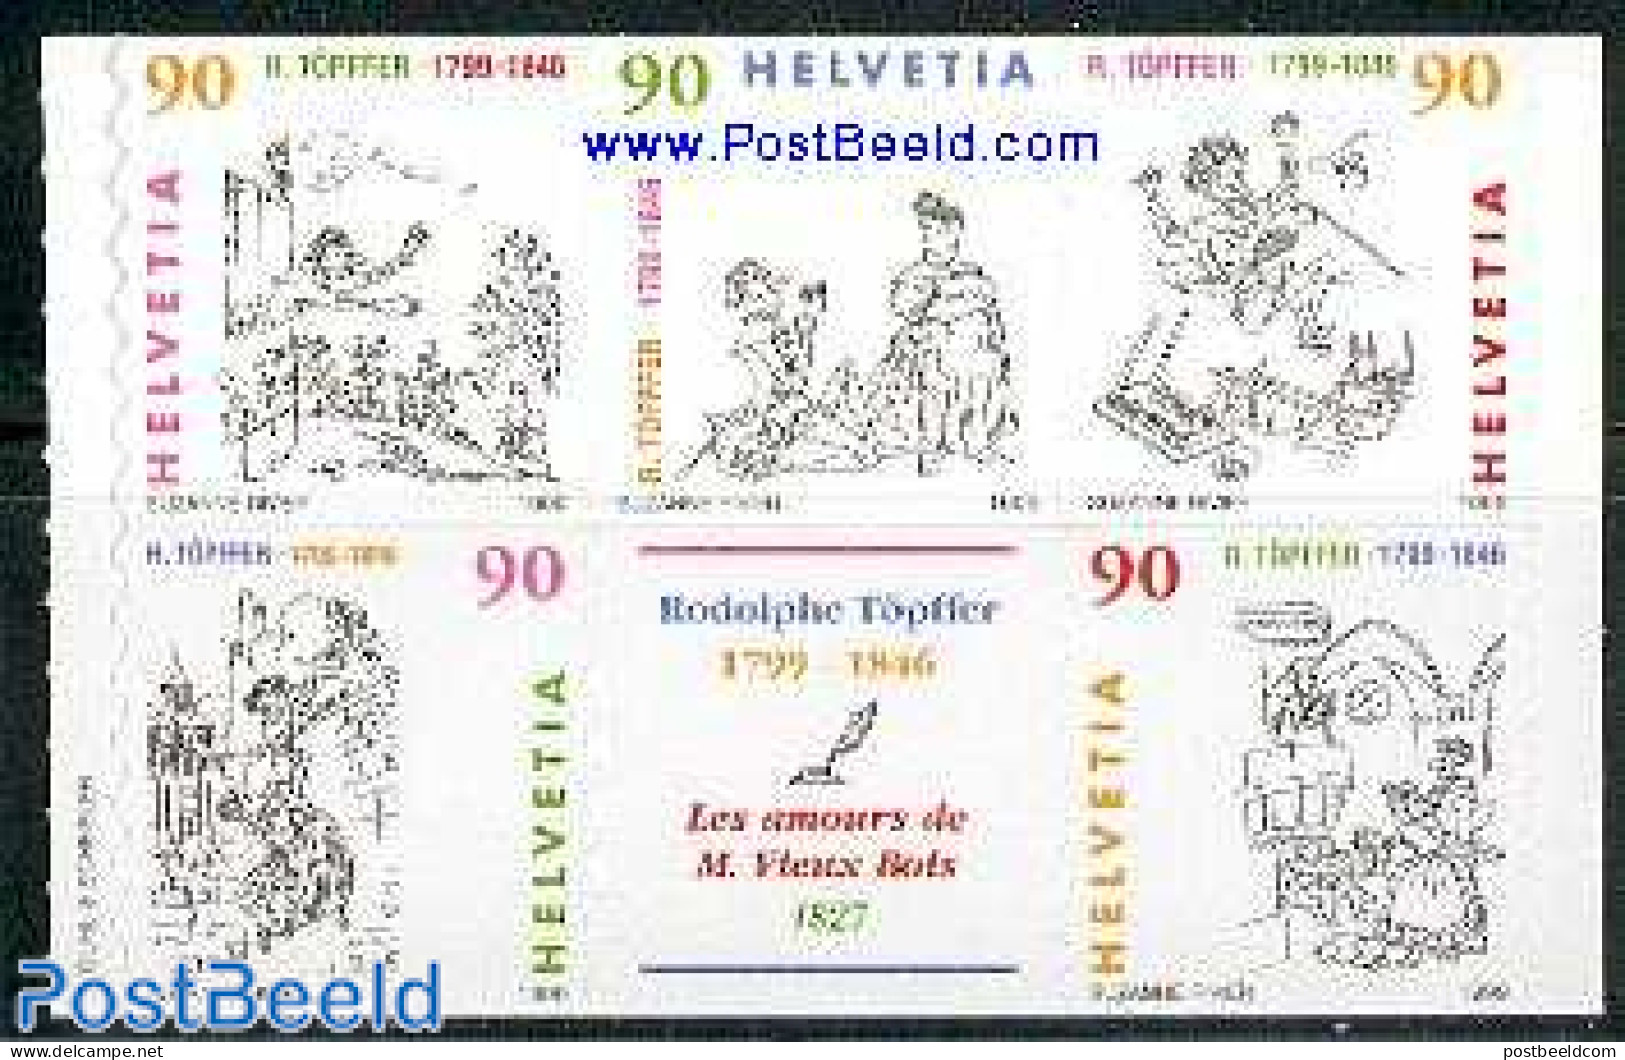 Switzerland 1999 R. Topffer 5v+tab S-a [++], Mint NH, Art - Children's Books Illustrations - Neufs